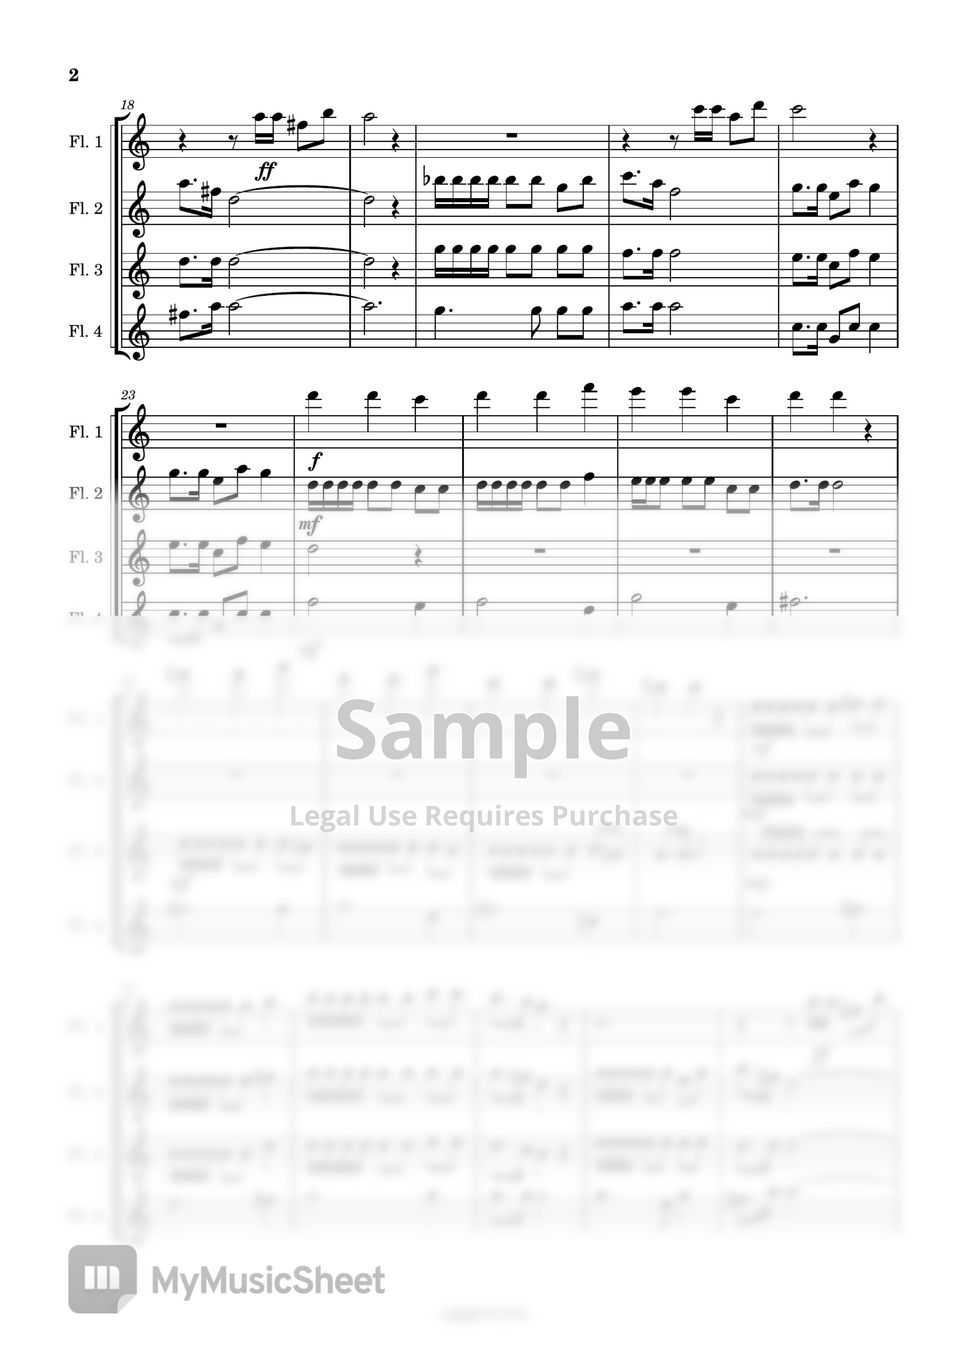 karl jenkins - Adiemus (반주MR/피아노 악보) by 심플플루트뮤직